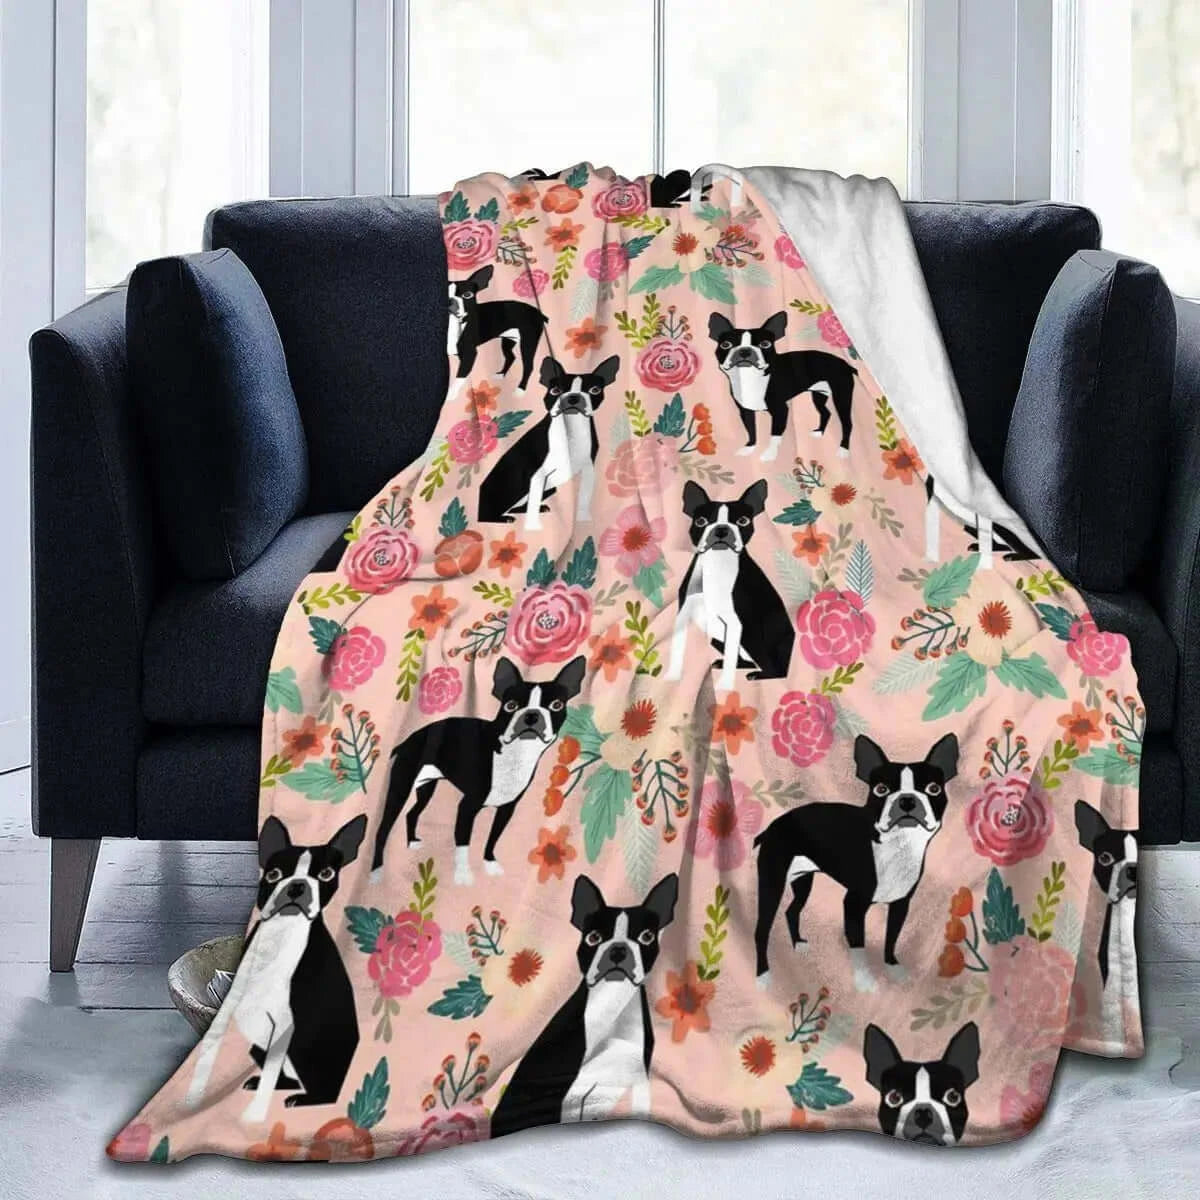 Soft Cozy Boston Terrier Blanket 